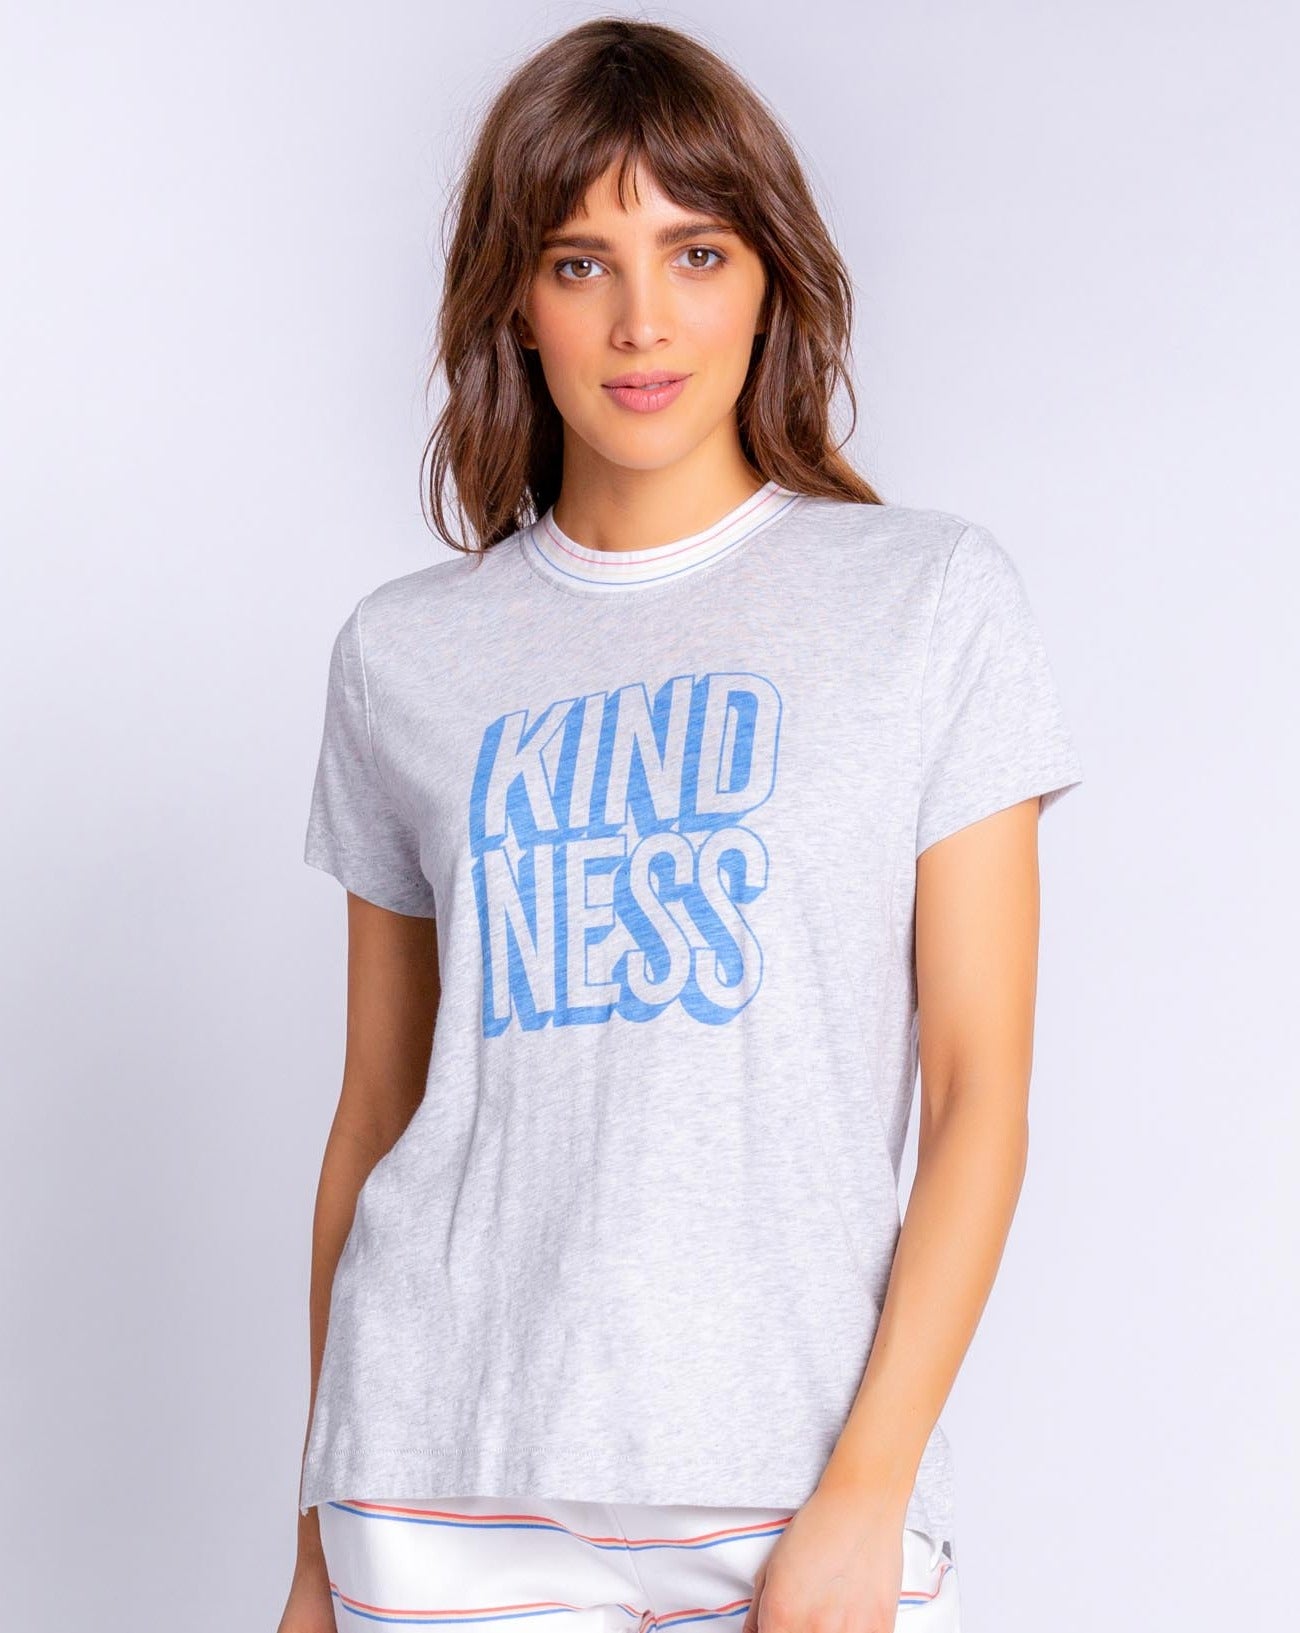 Kindness Rules Short Sleeve T-Shirt, Size L